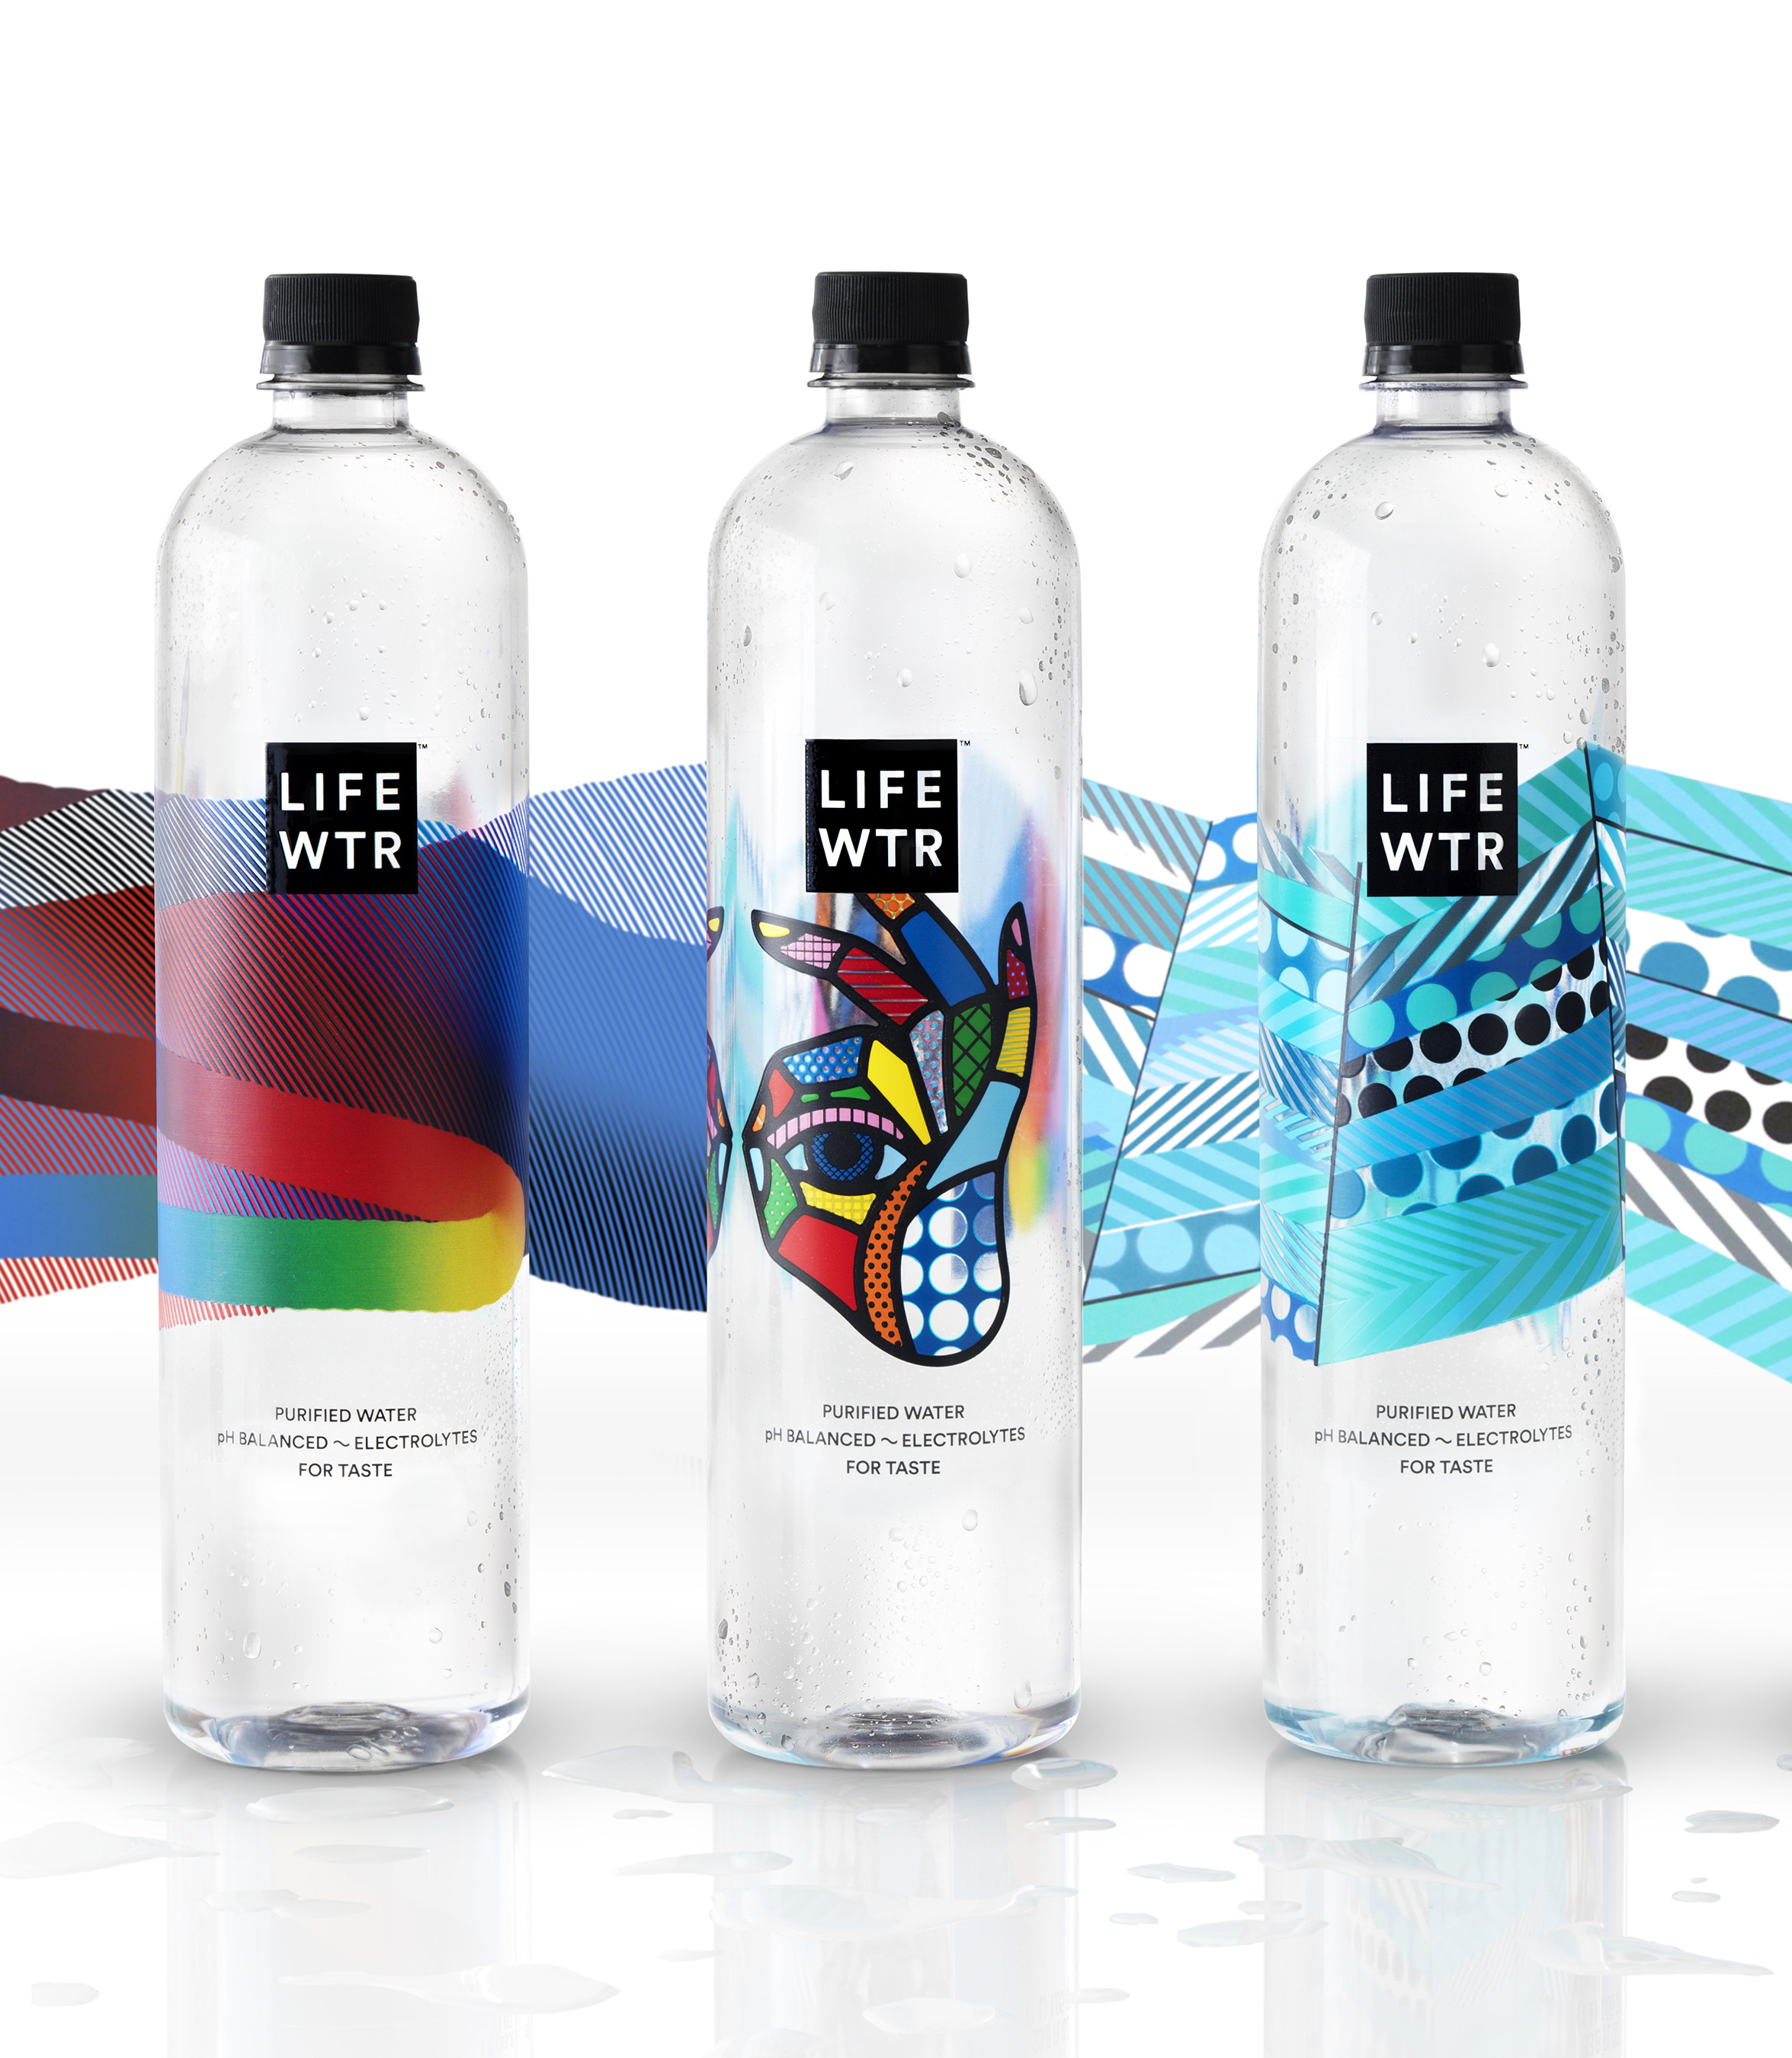 LIFEWTR: Bottles